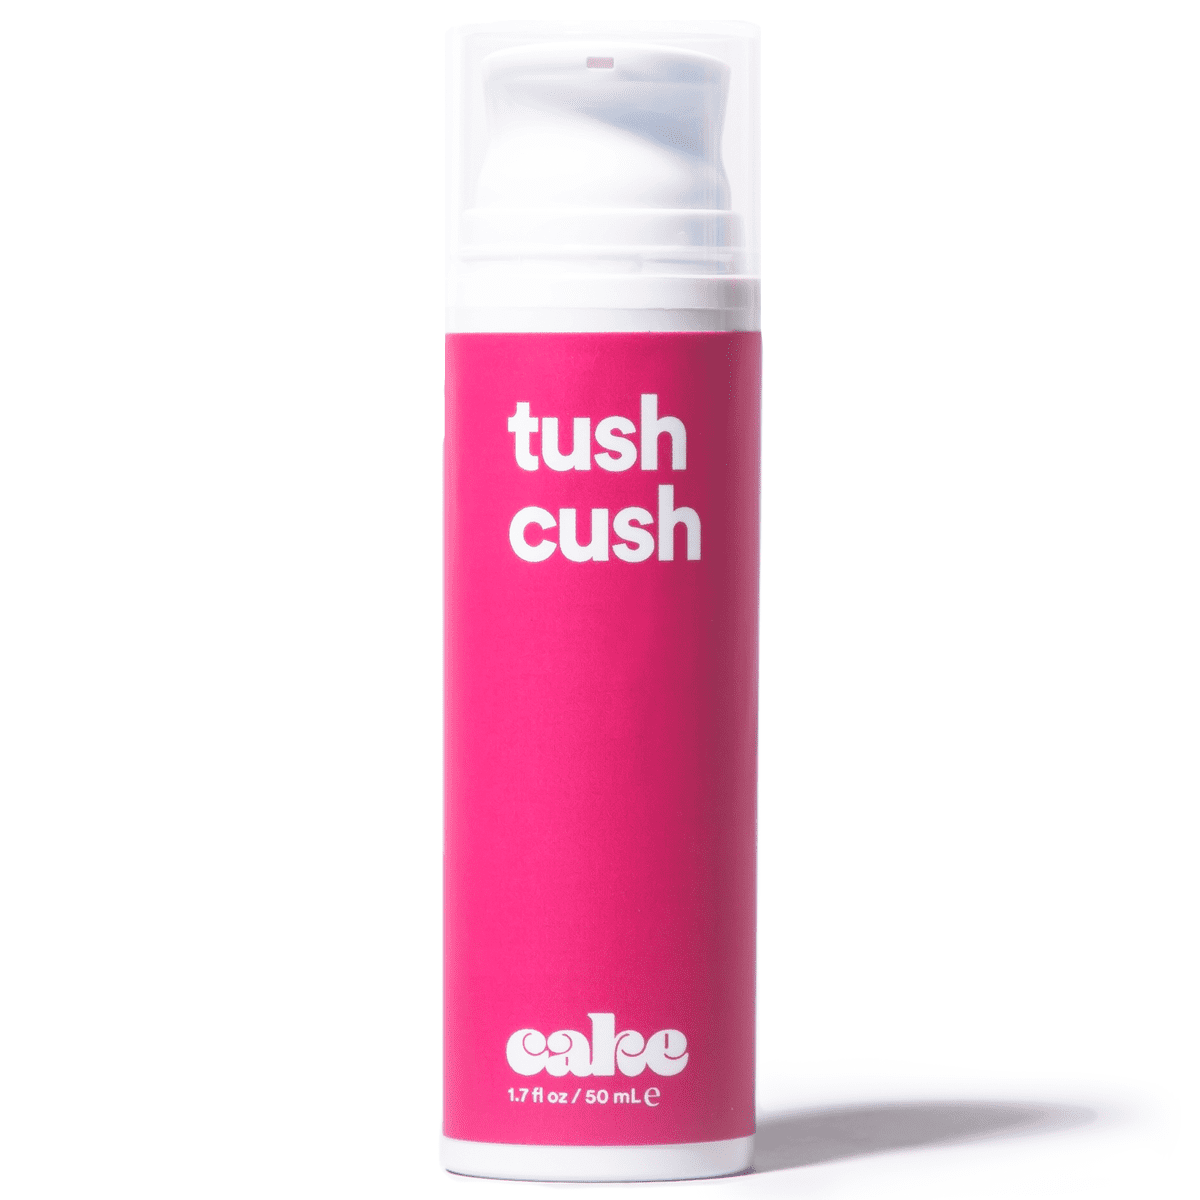 TUSH CUSH - Hello Cake, Inc. Trademark Registration